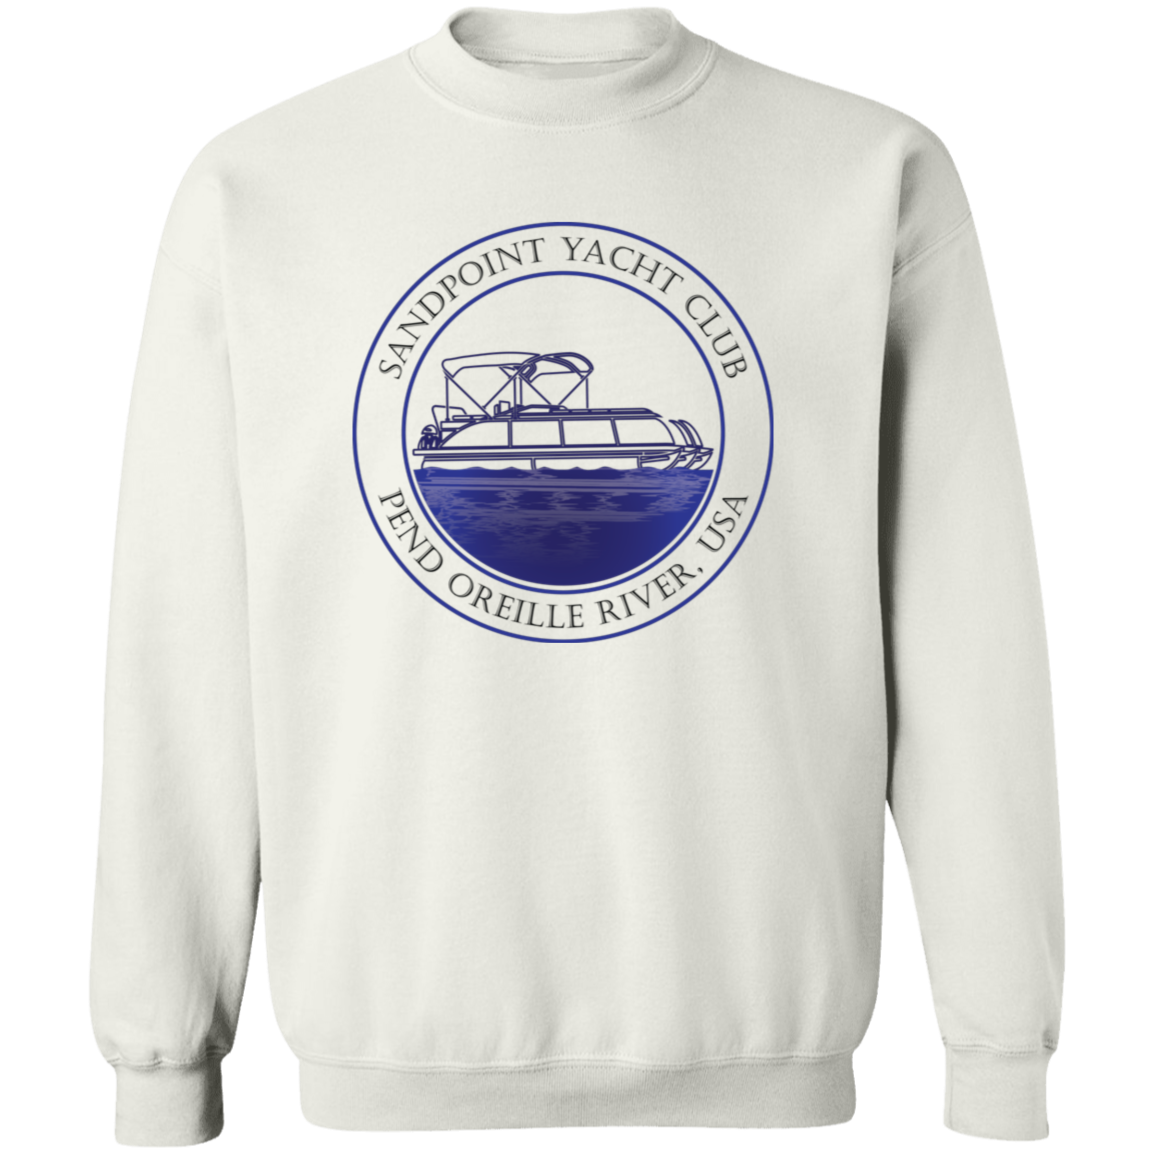 Sandpoint Yacht Club - Sweatshirt